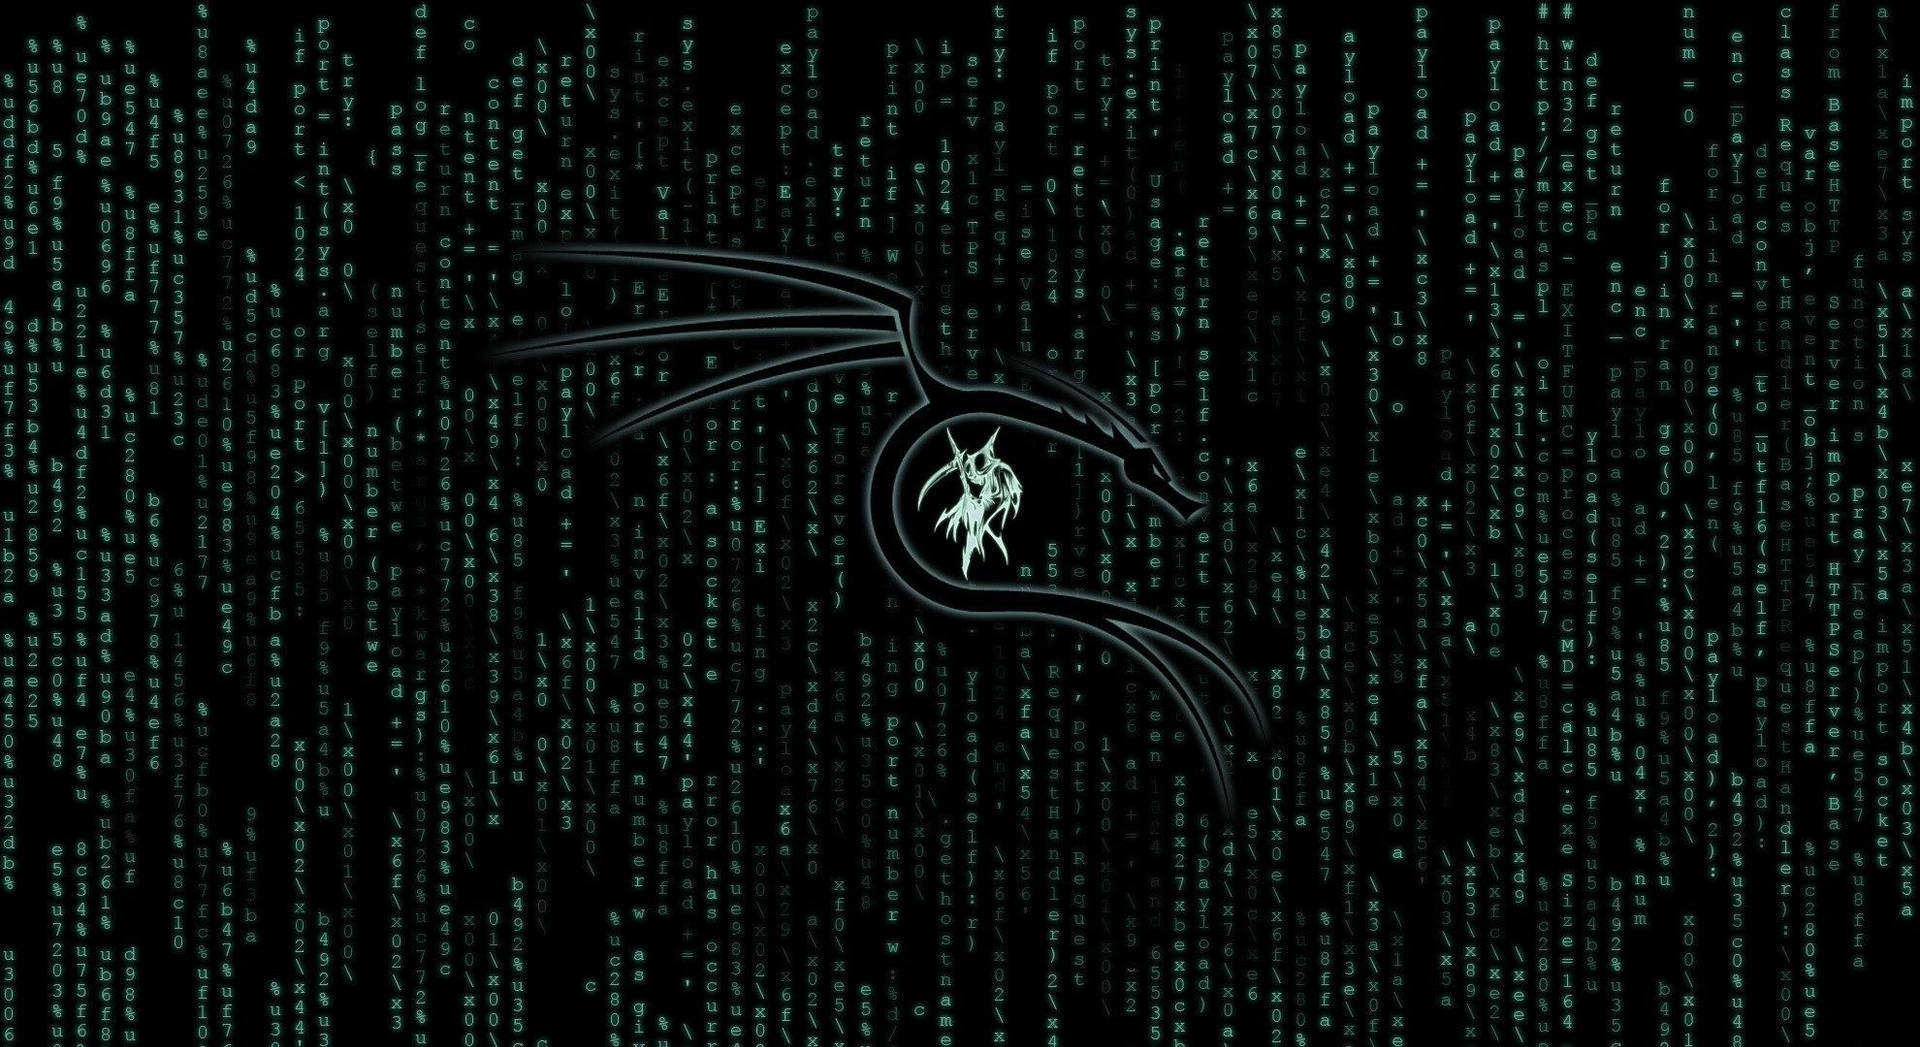 Codes Of Kali Linux Wallpaper